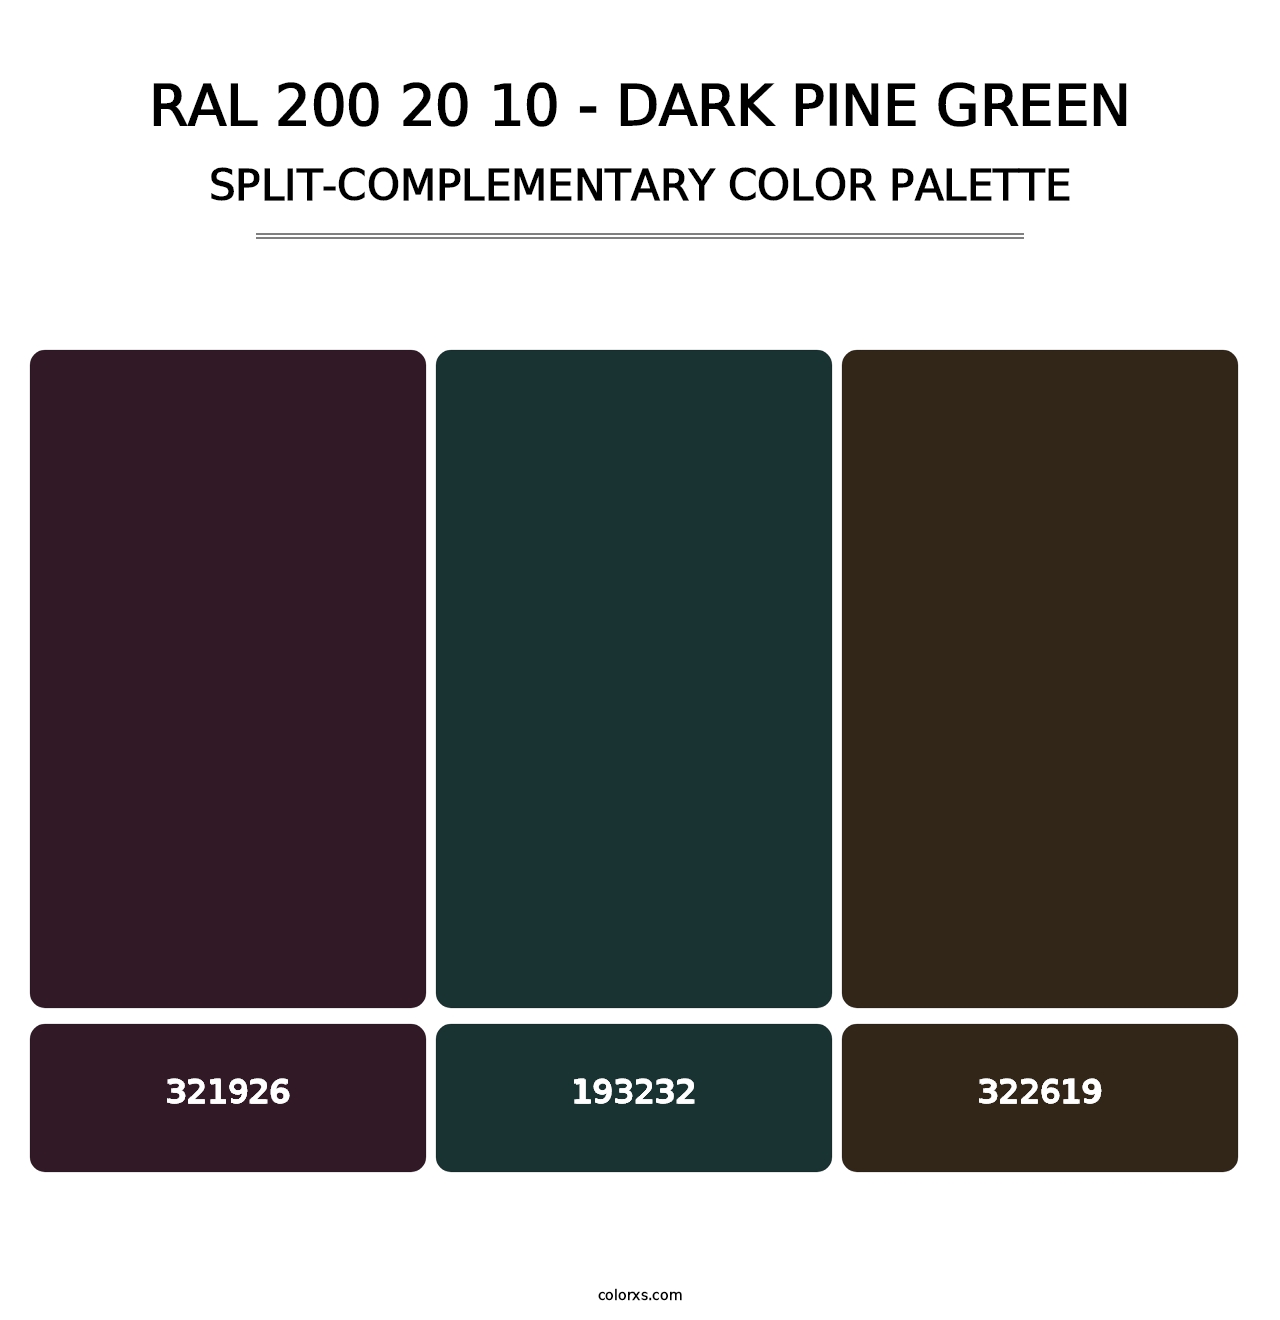 RAL 200 20 10 - Dark Pine Green - Split-Complementary Color Palette